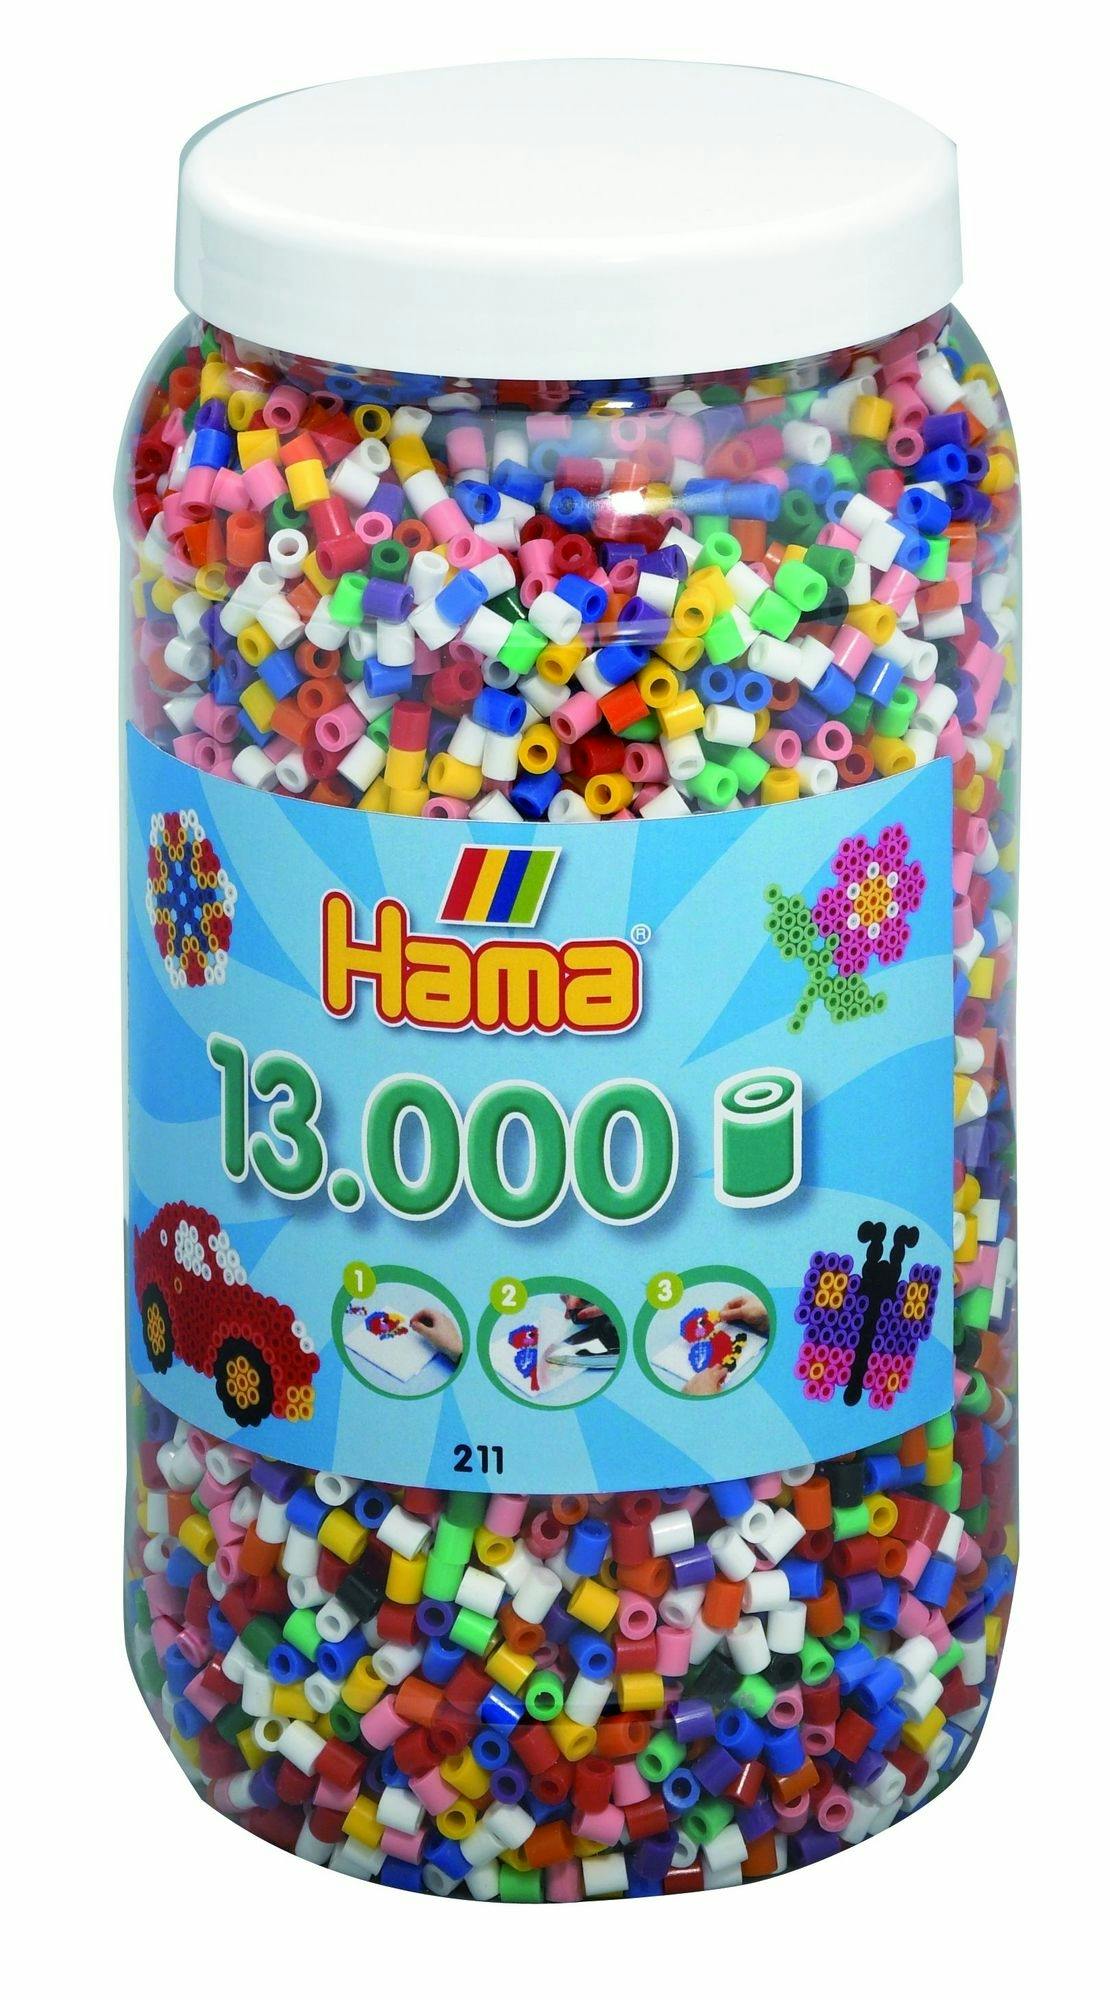 Hama Strijkparels In Ton - 13 000 Stuks